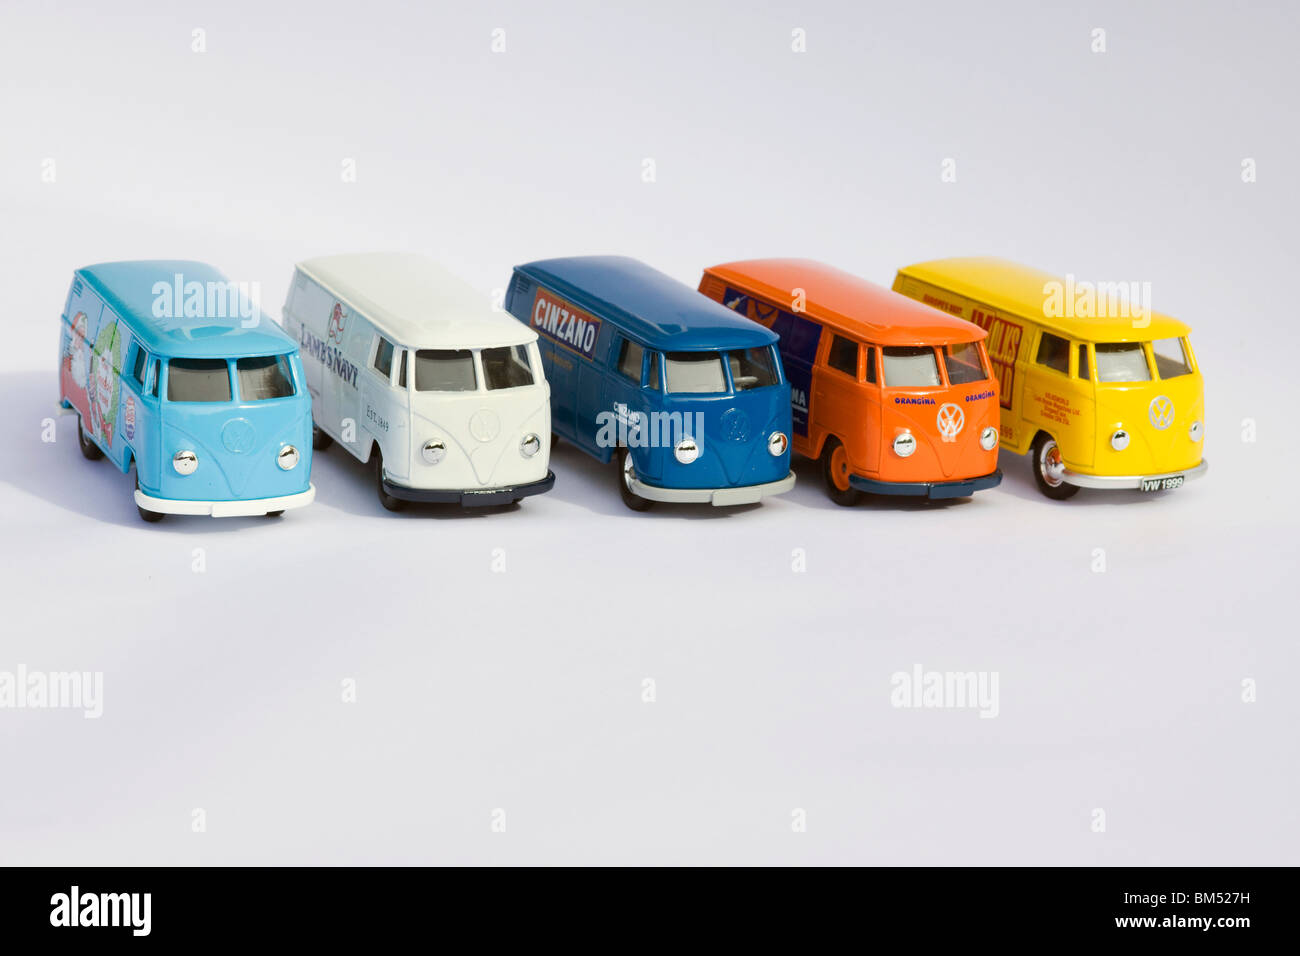 Children's collectible toy model of Five Volkswagen split screen panel vans on white background Stock Photo